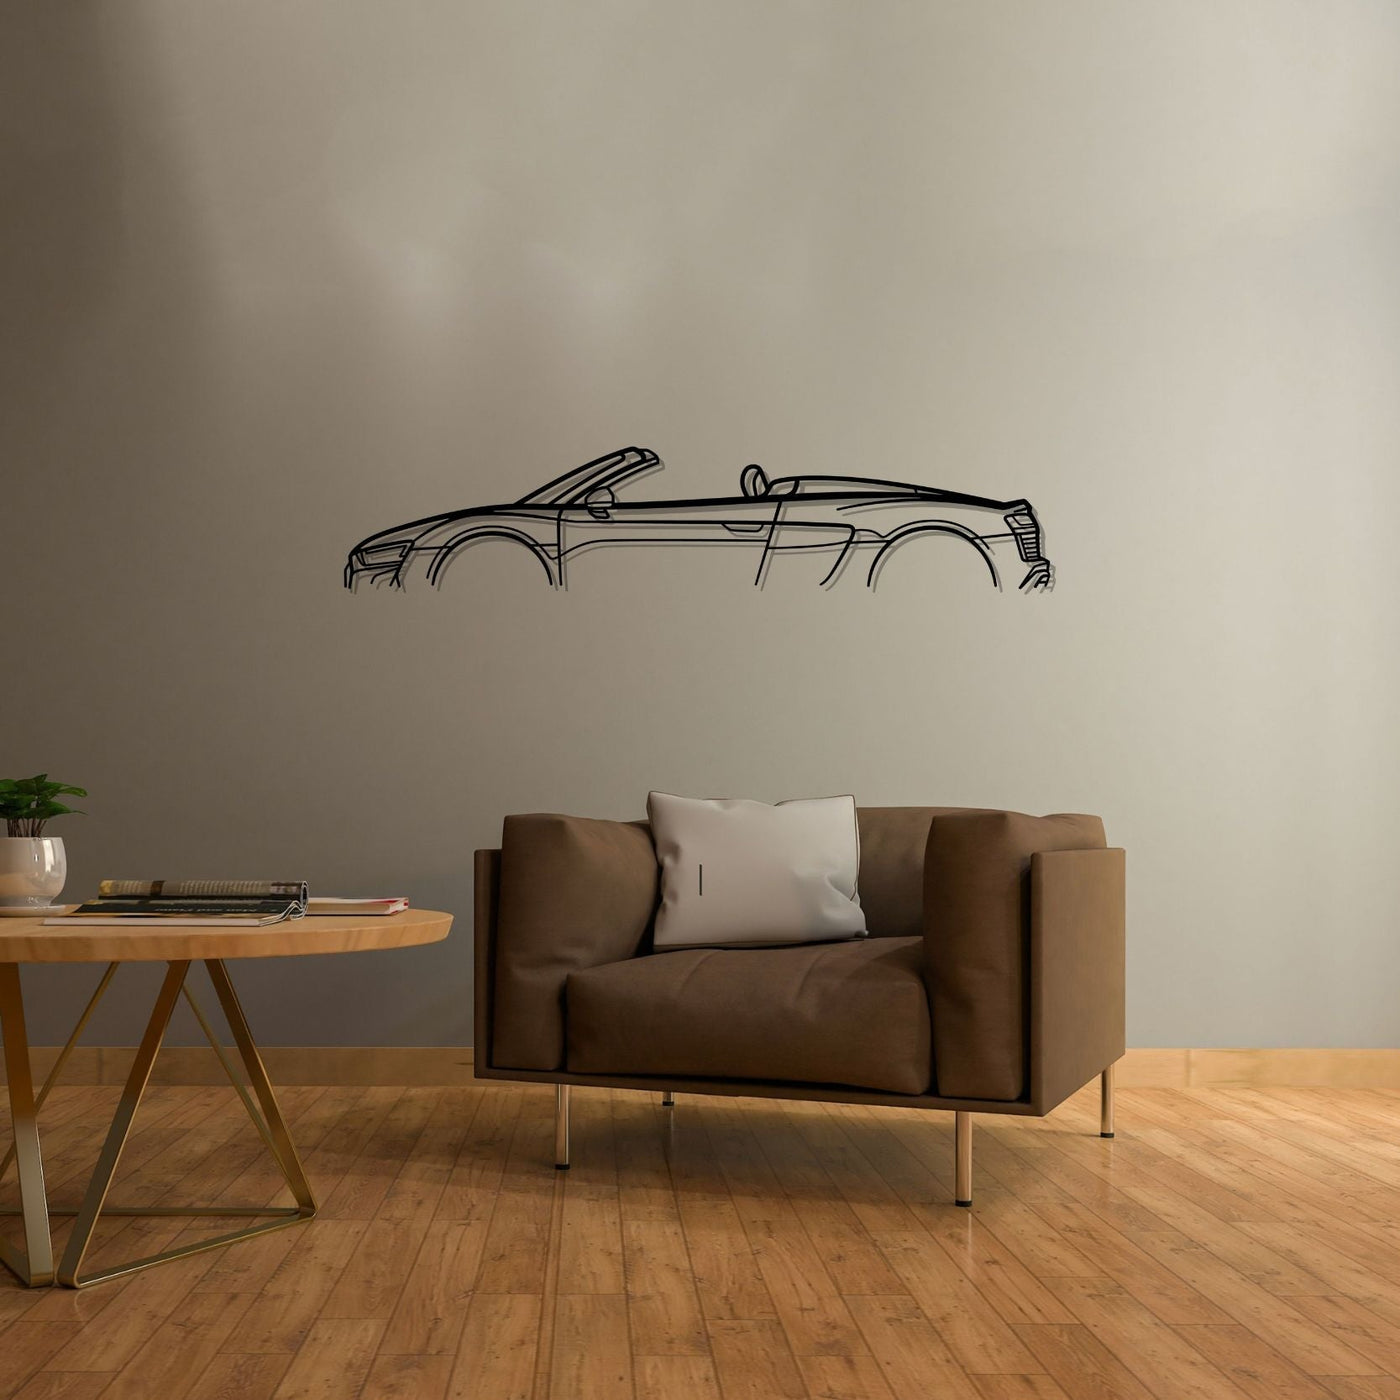 R8 Spyder Mk2 Classic Metal Silhouette Wall Art